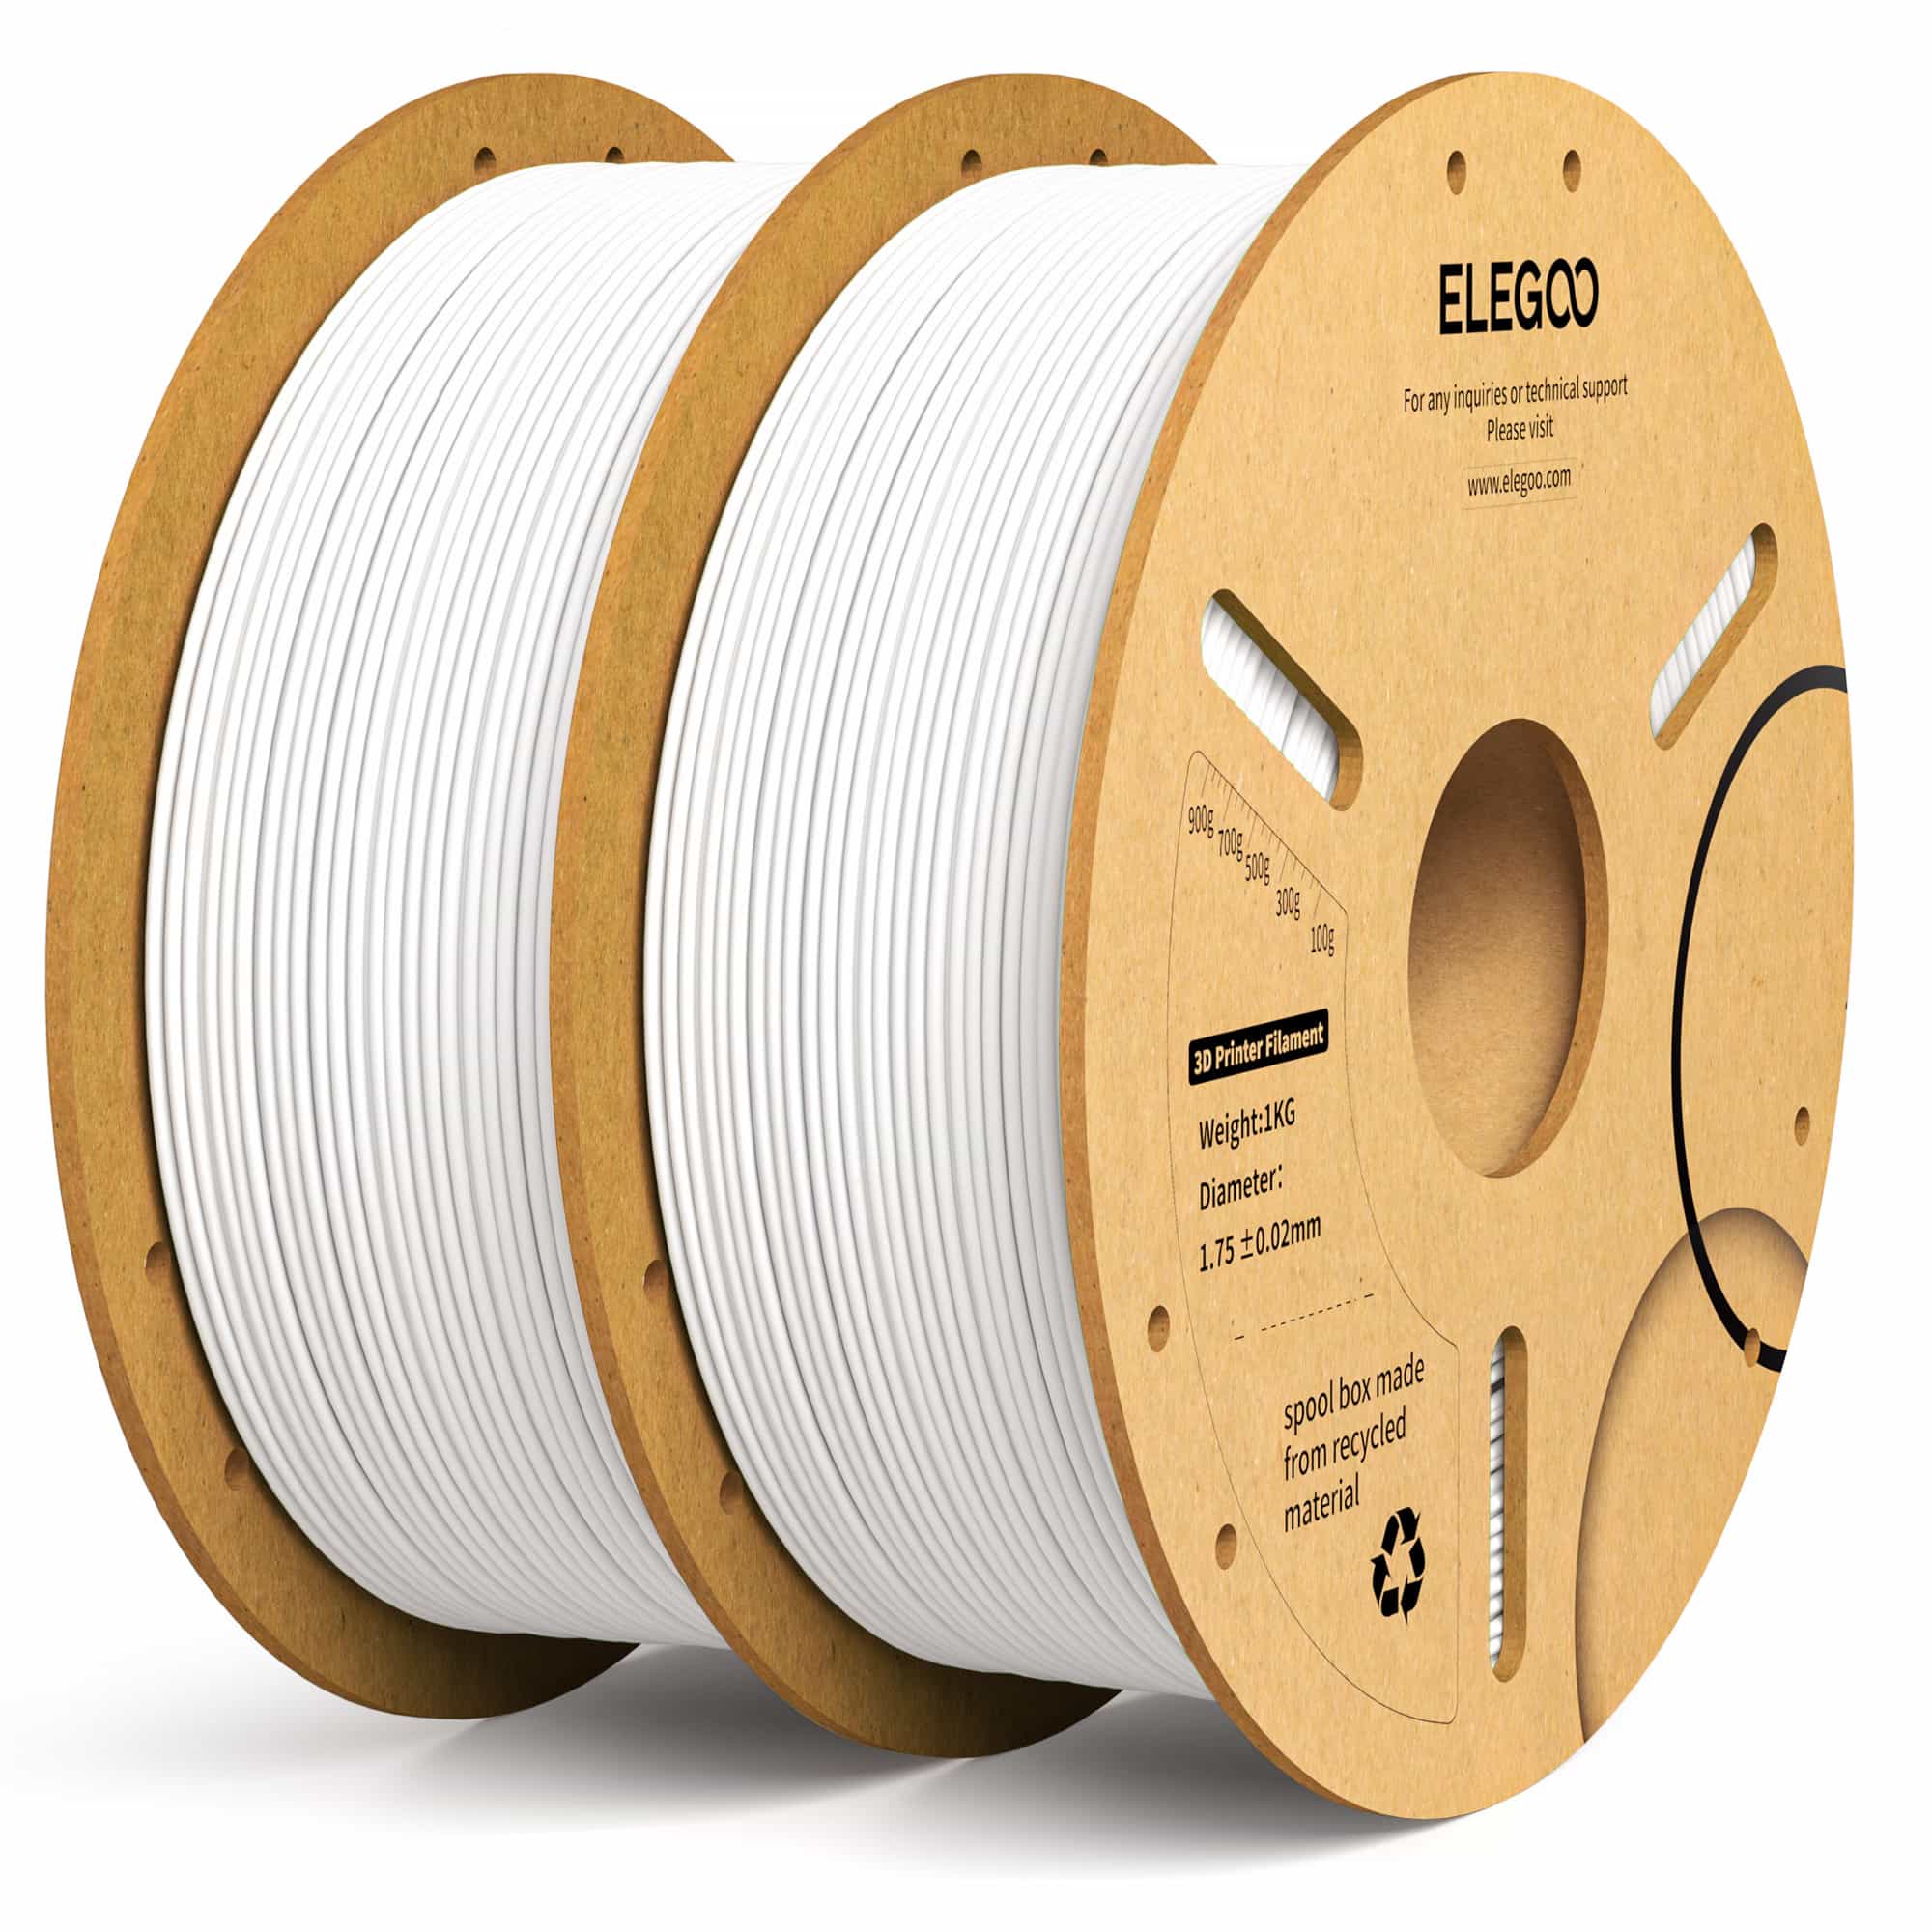  ELEGOO PLA PRO Filament 1.75mm White 1KG, Improved